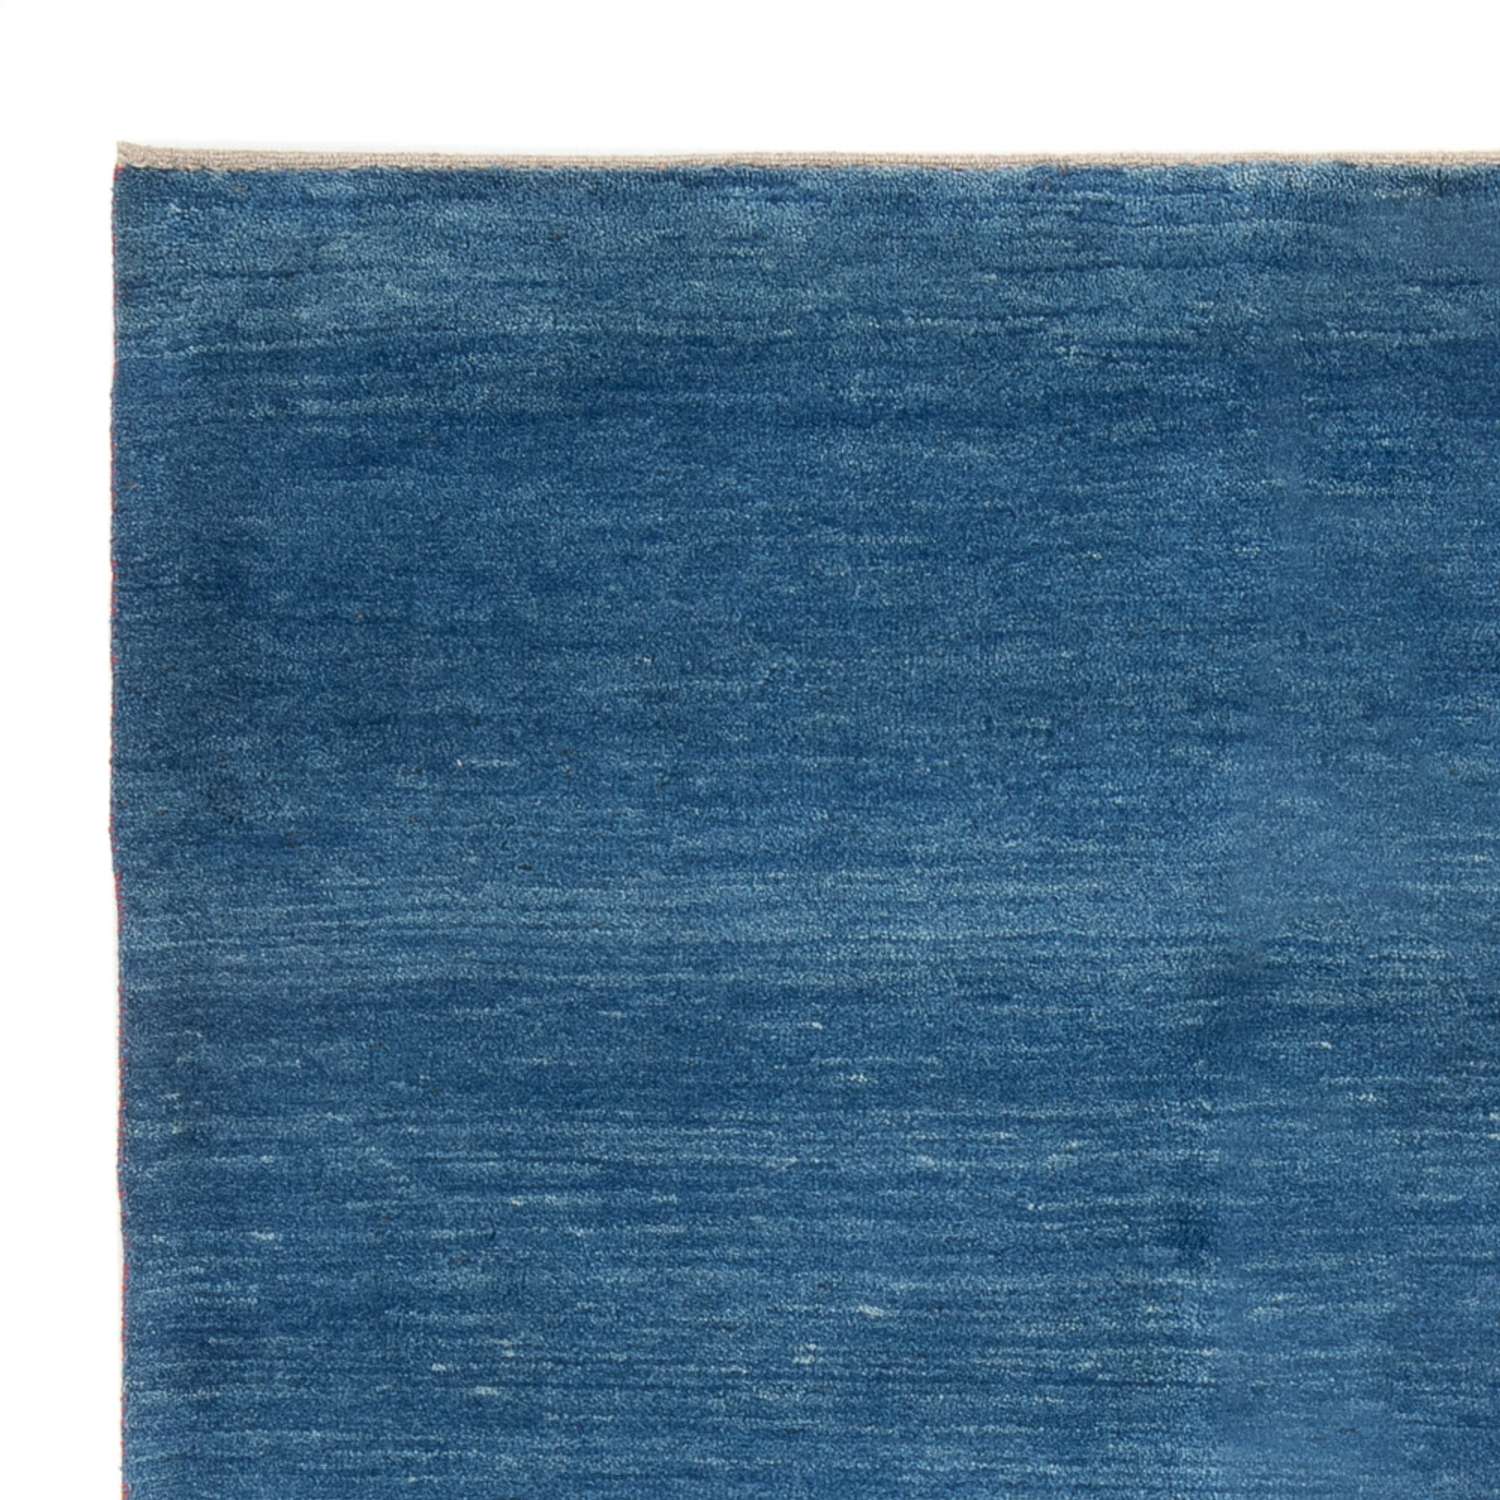 Alfombra Gabbeh - Persa - 252 x 170 cm - azul marino